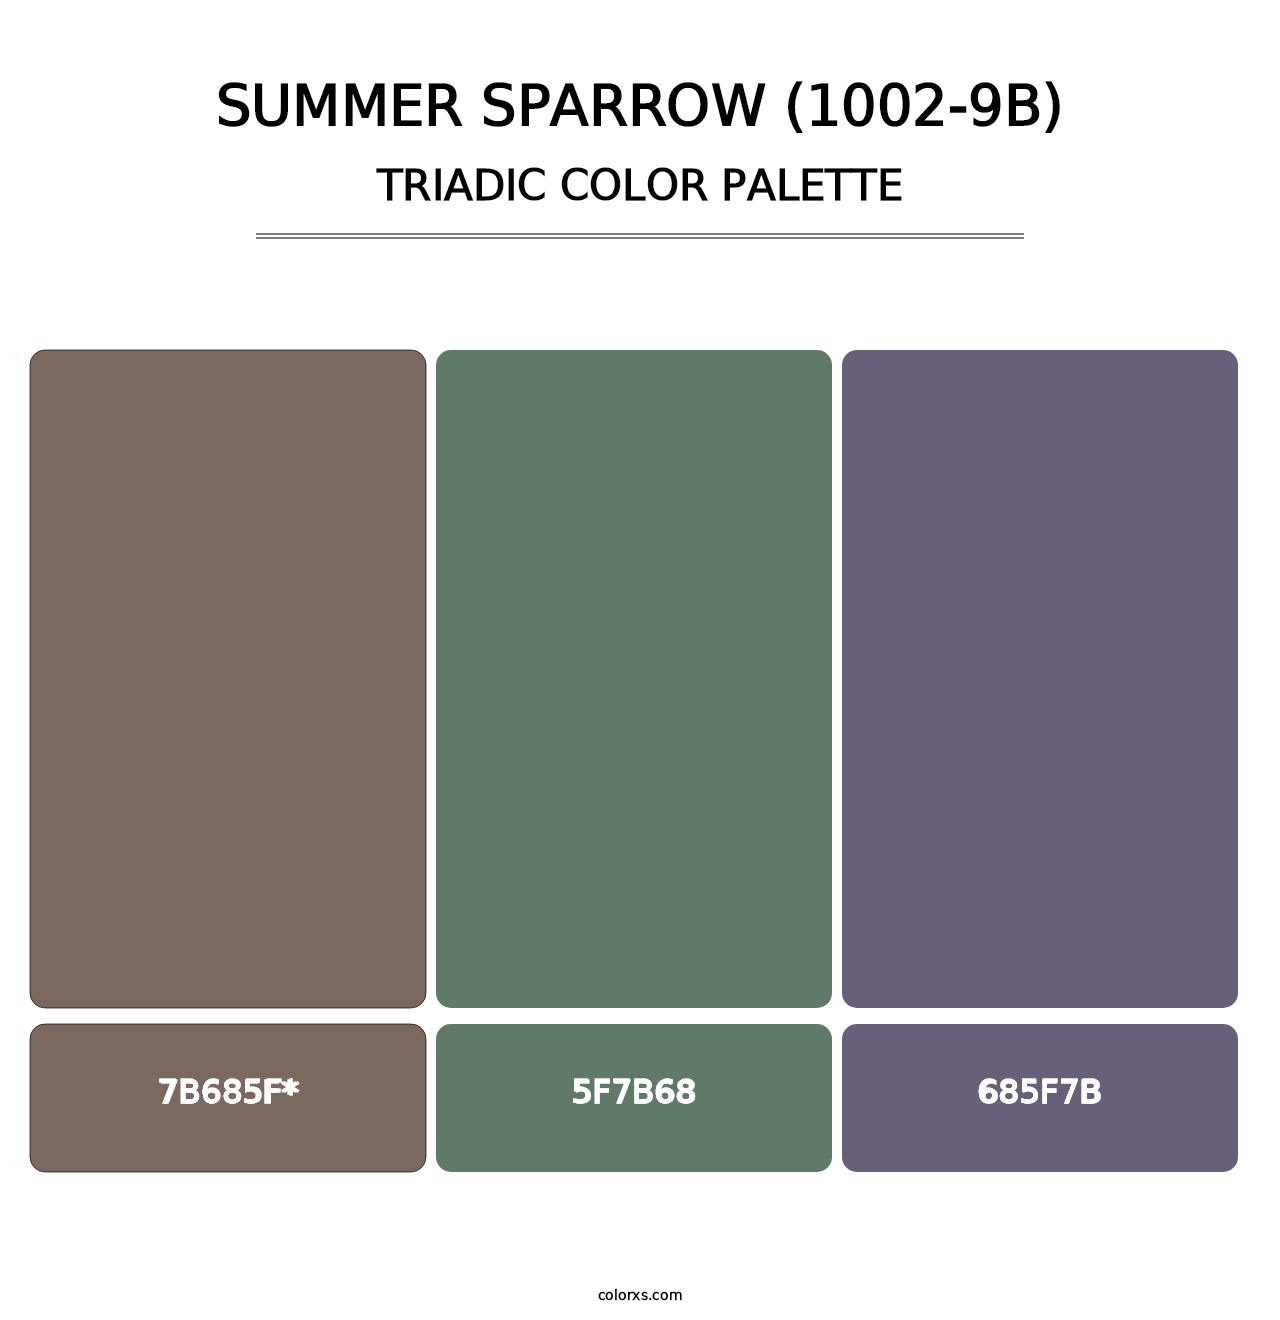 Summer Sparrow (1002-9B) - Triadic Color Palette